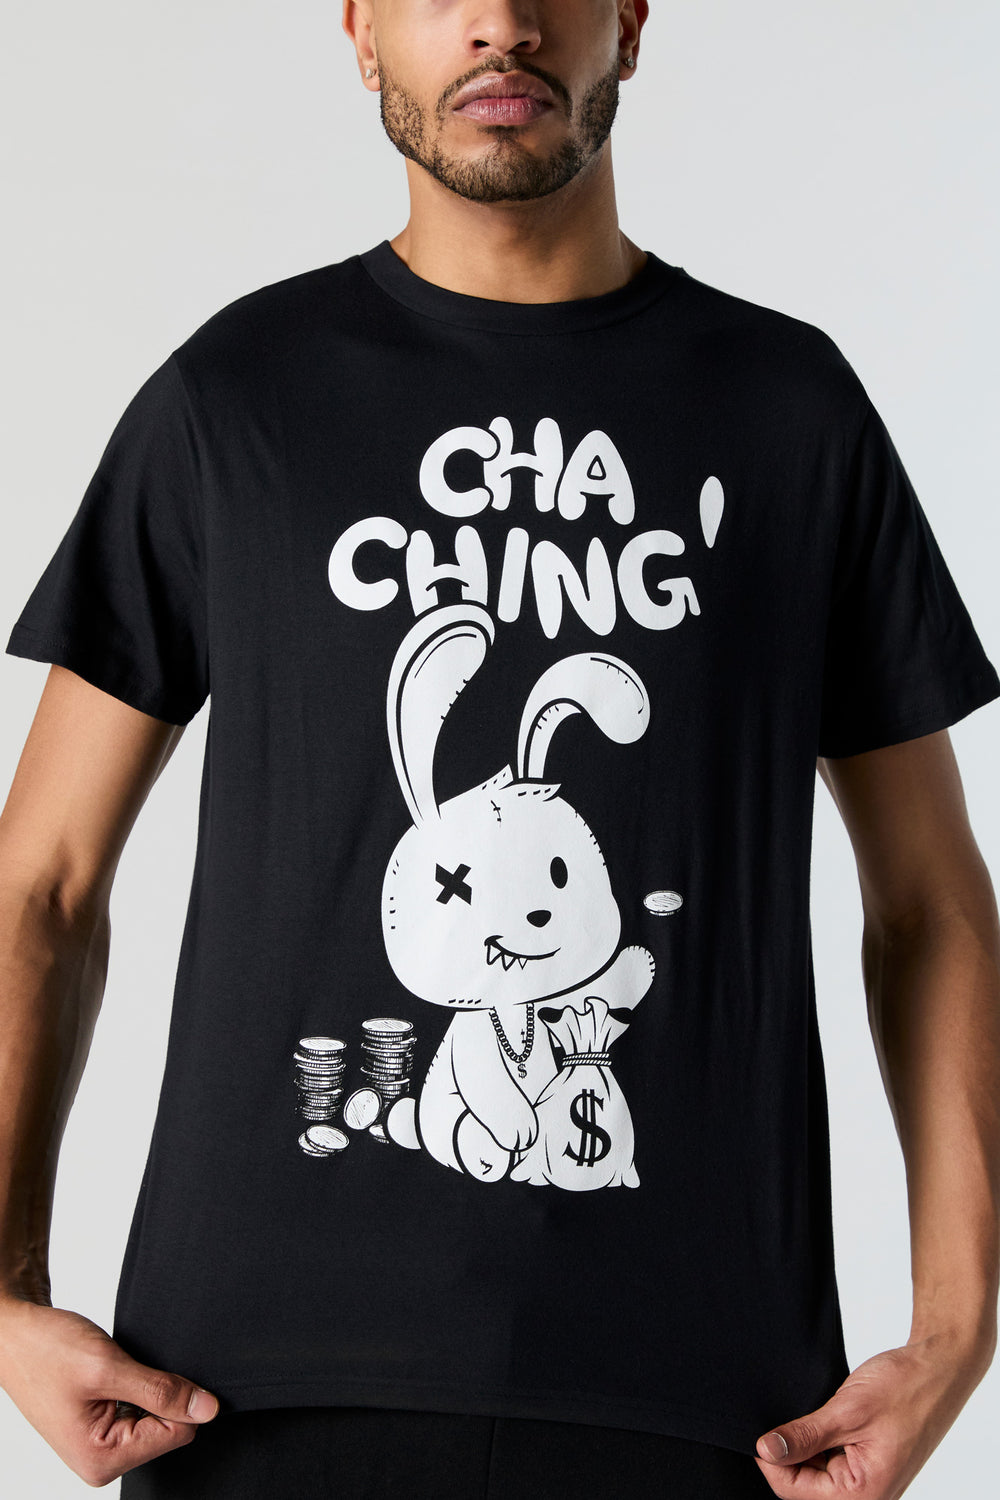 Cha Ching Graphic T-Shirt Cha Ching Graphic T-Shirt 1